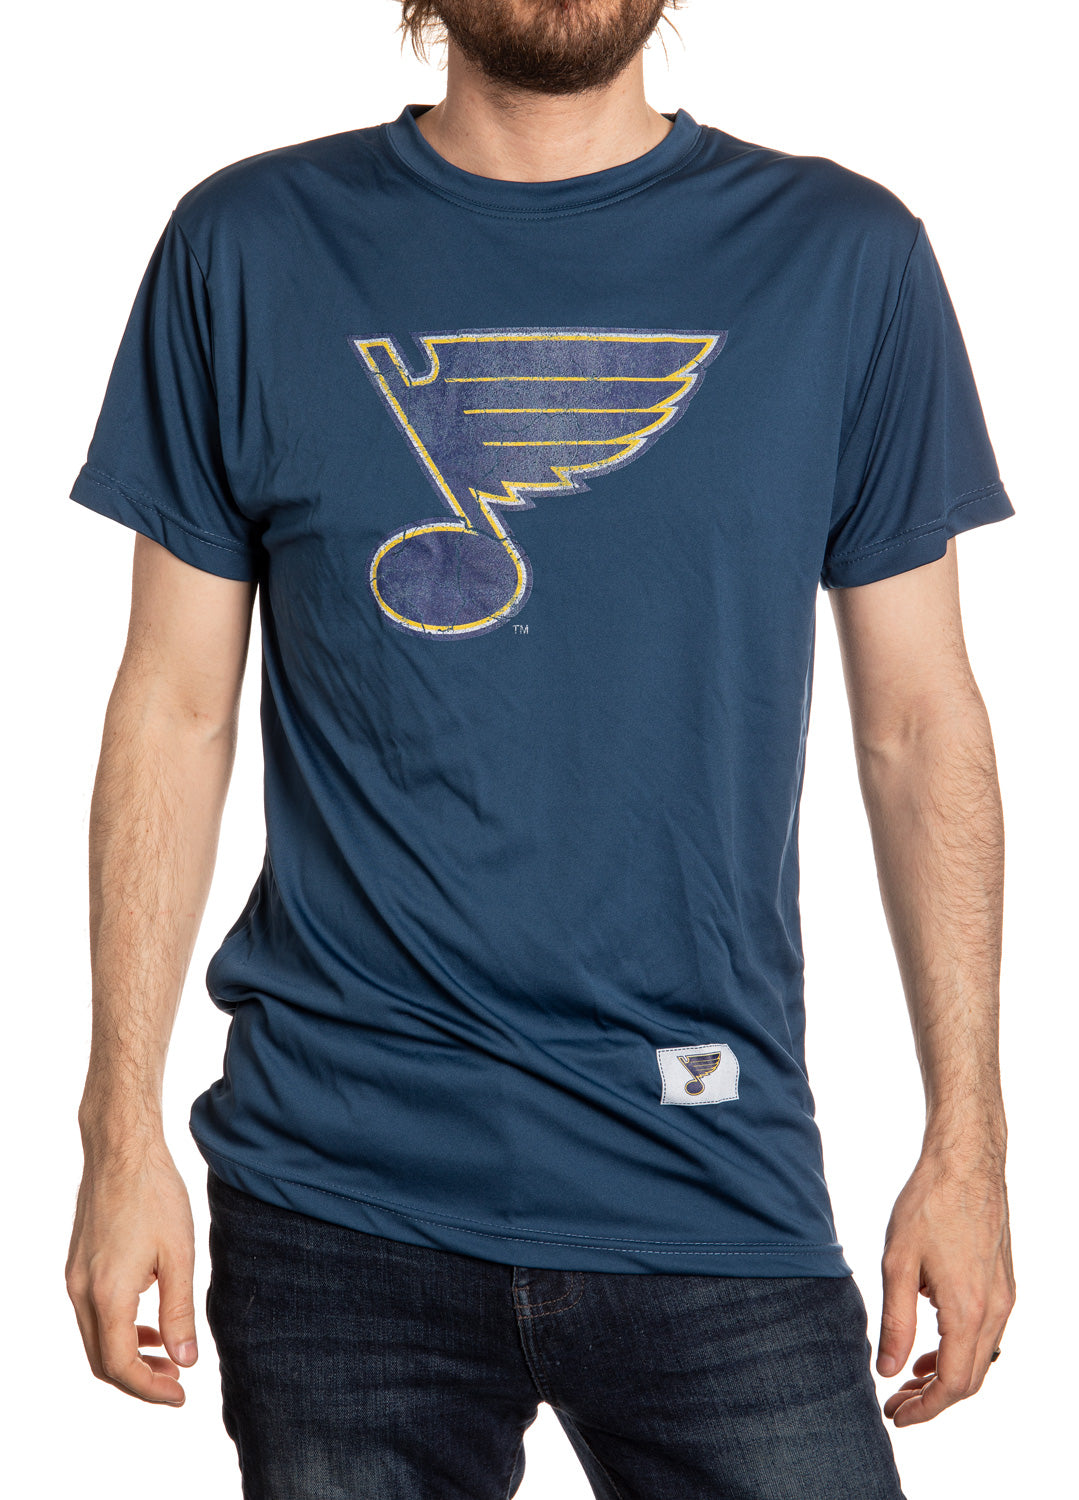 St. Louis Blues Short Sleeve Rashguard - Distressed Logo Front VIew